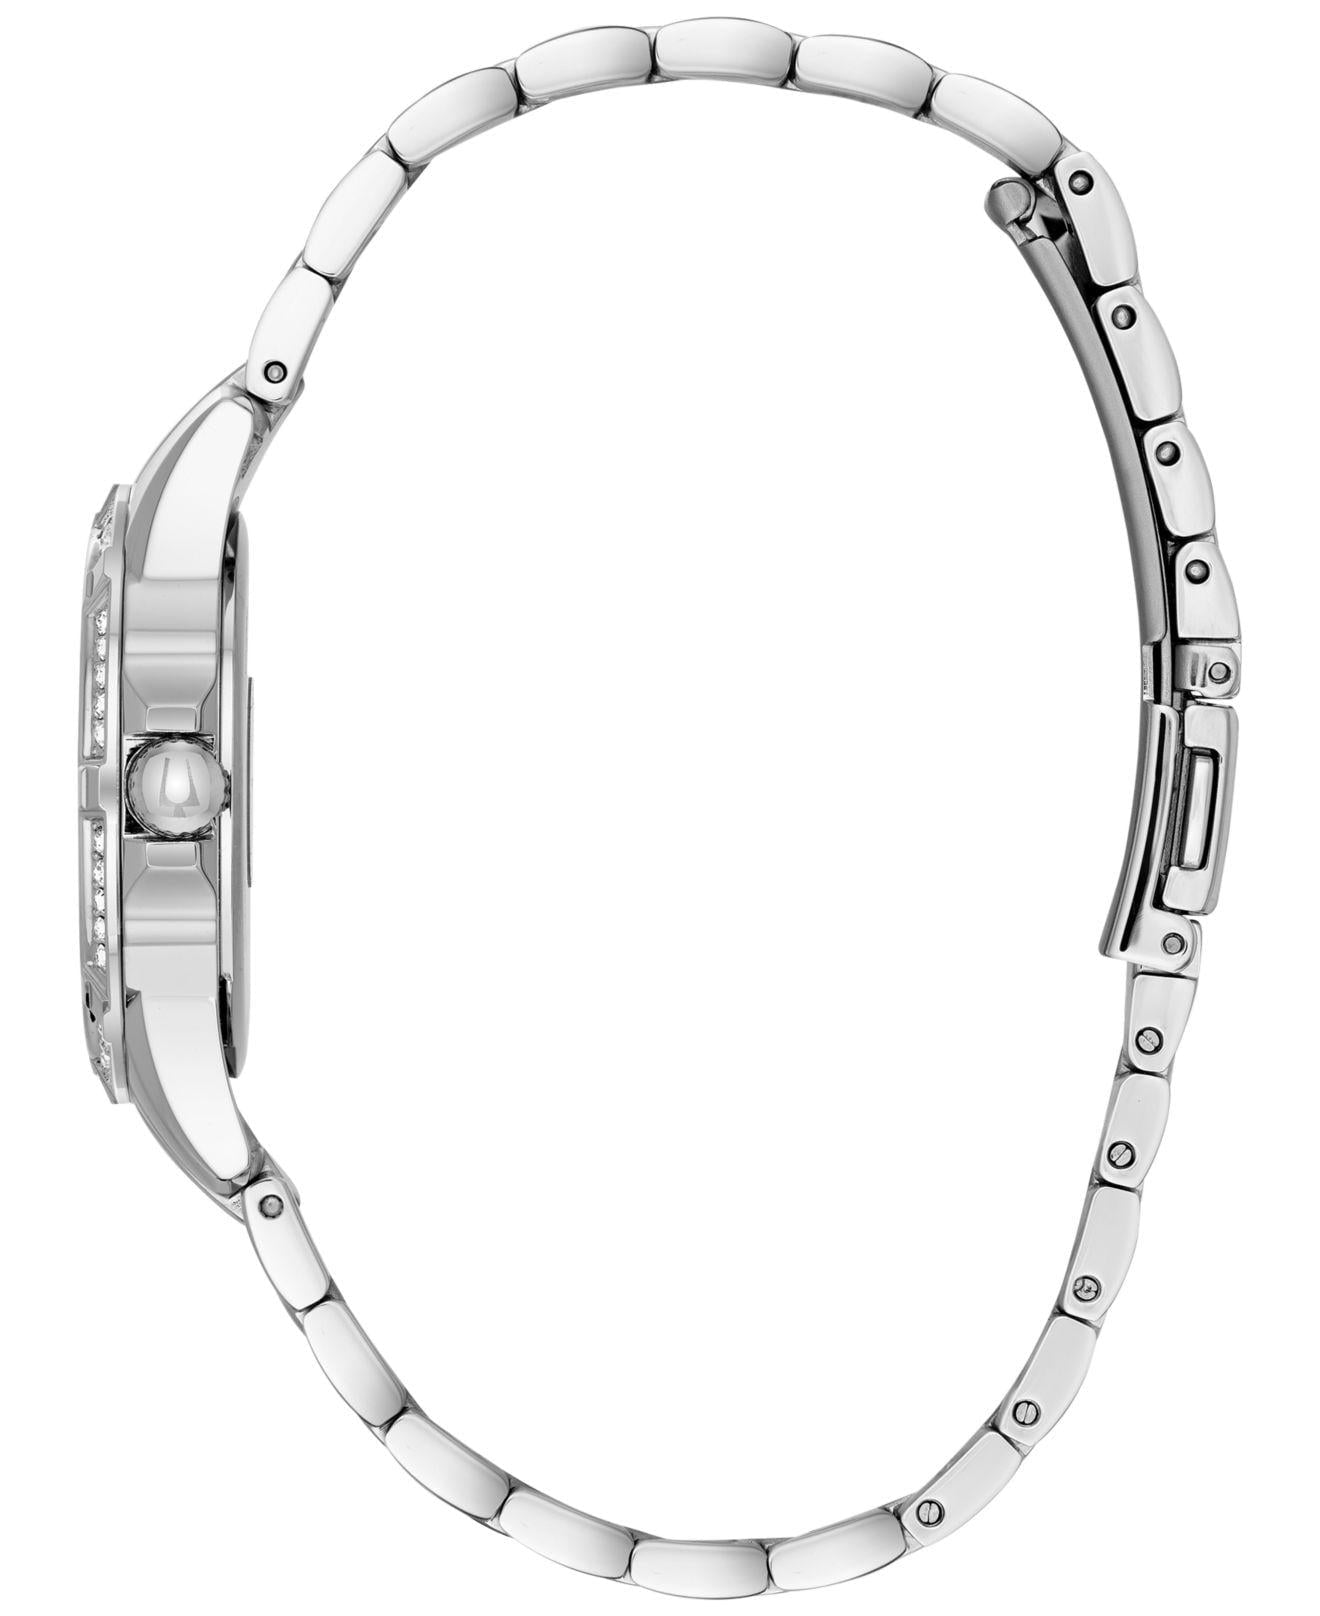 Bulova Crystal Silver Dial Silver Steel Strap Watch for Women - 96L226